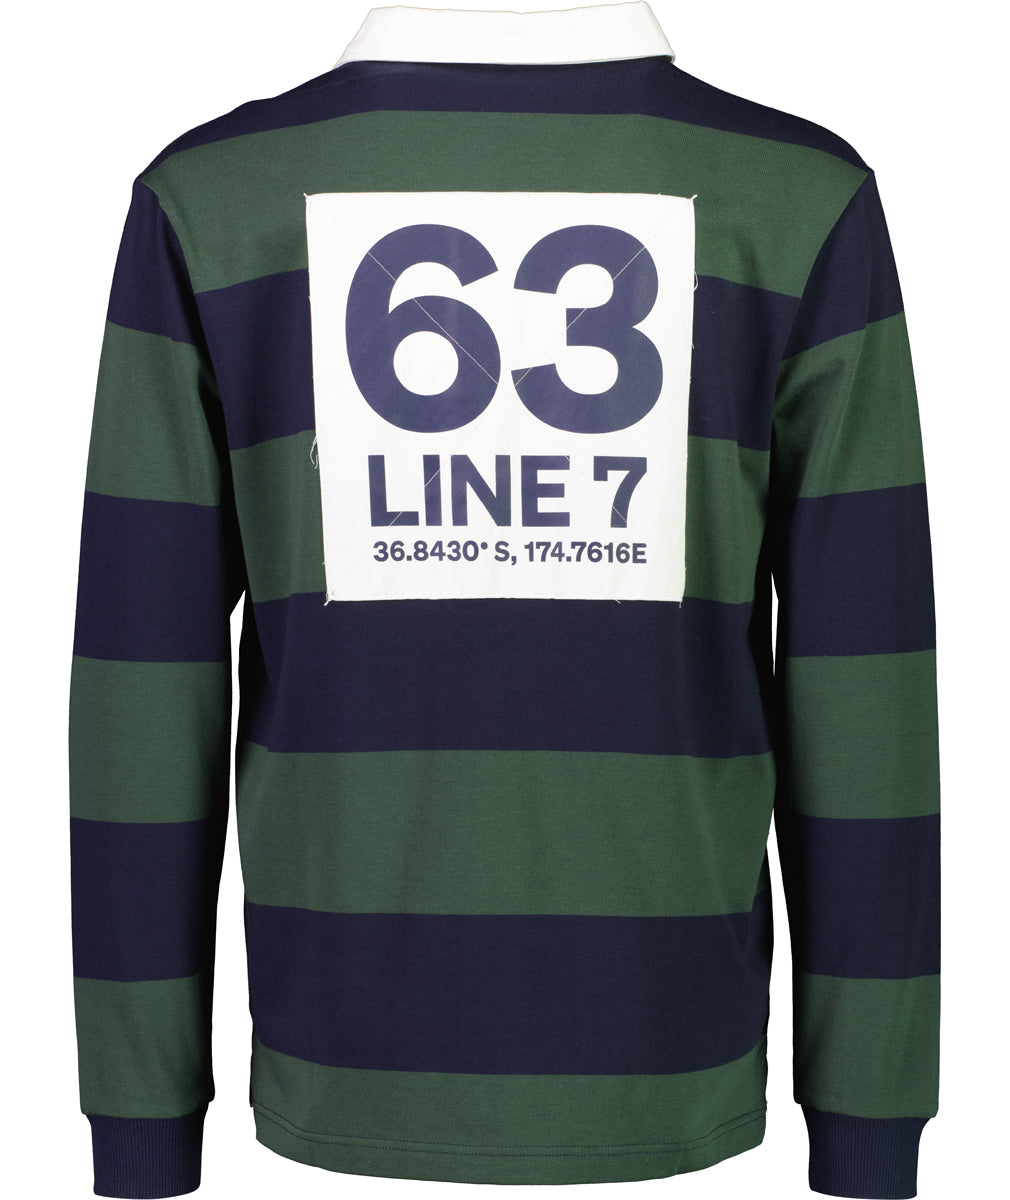 line-7-men-s-range-cotton-rugby-top_1.jpg